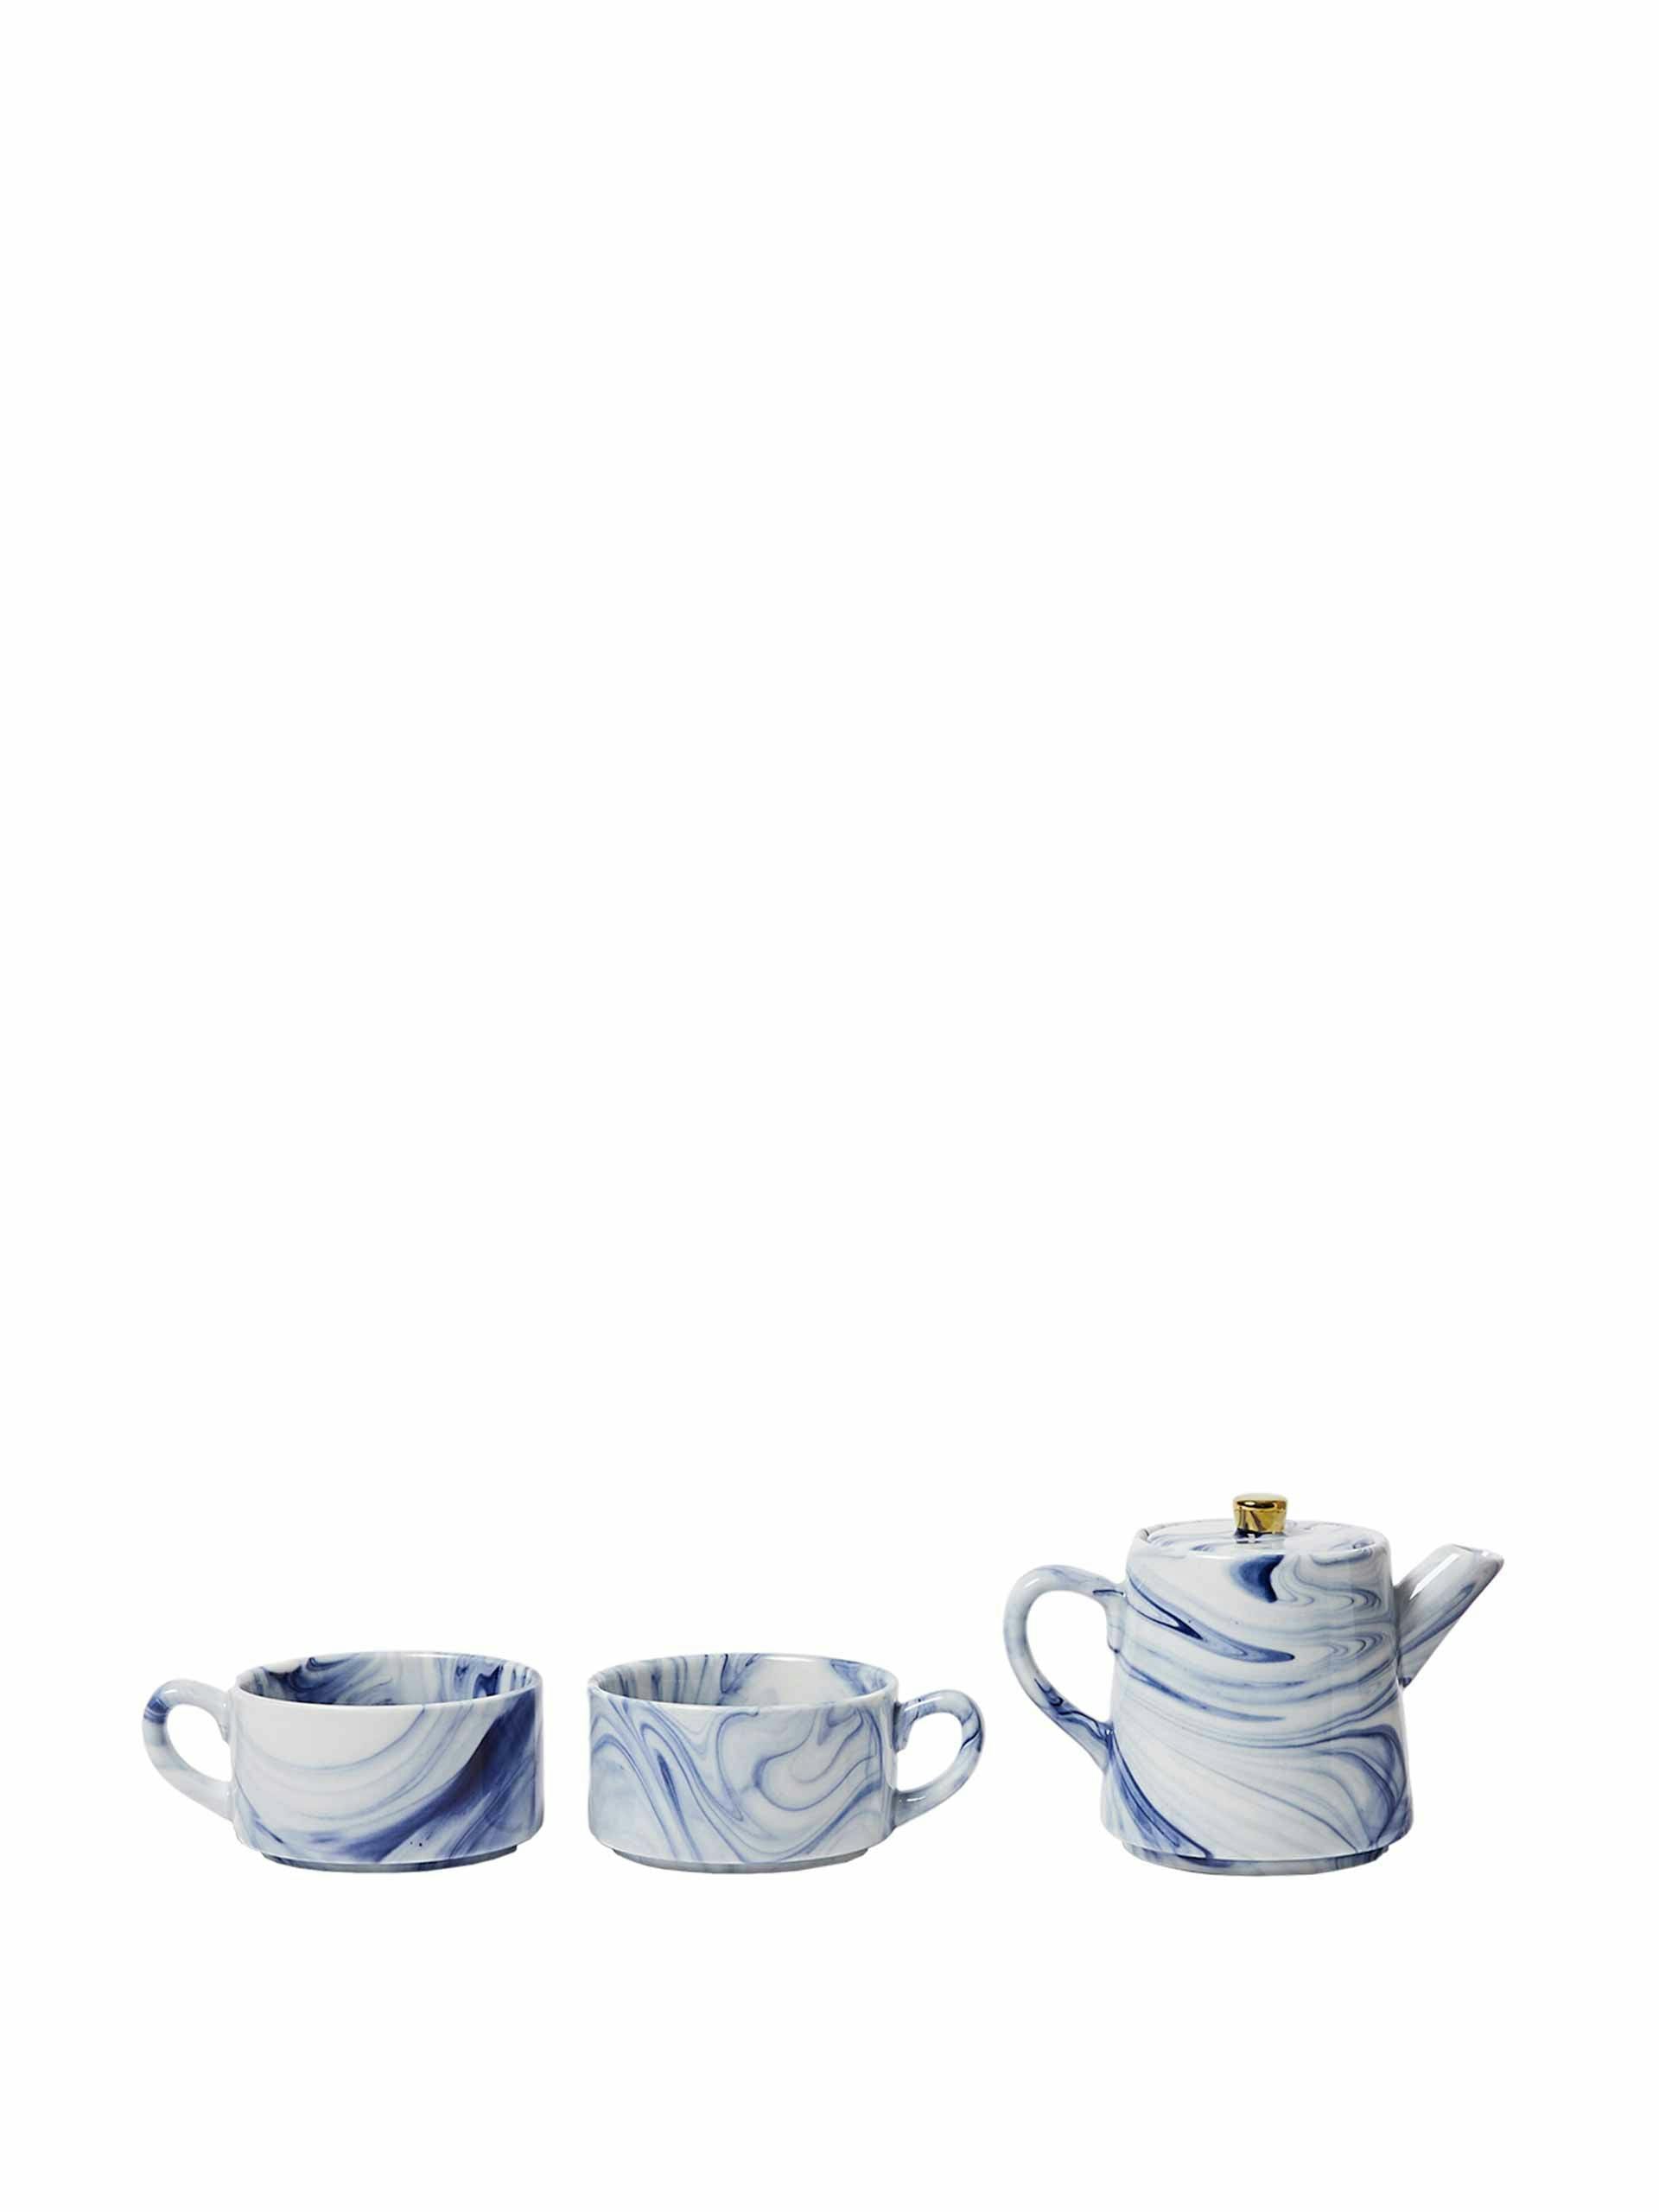 Mahi marbled blue ceramic tea for two set